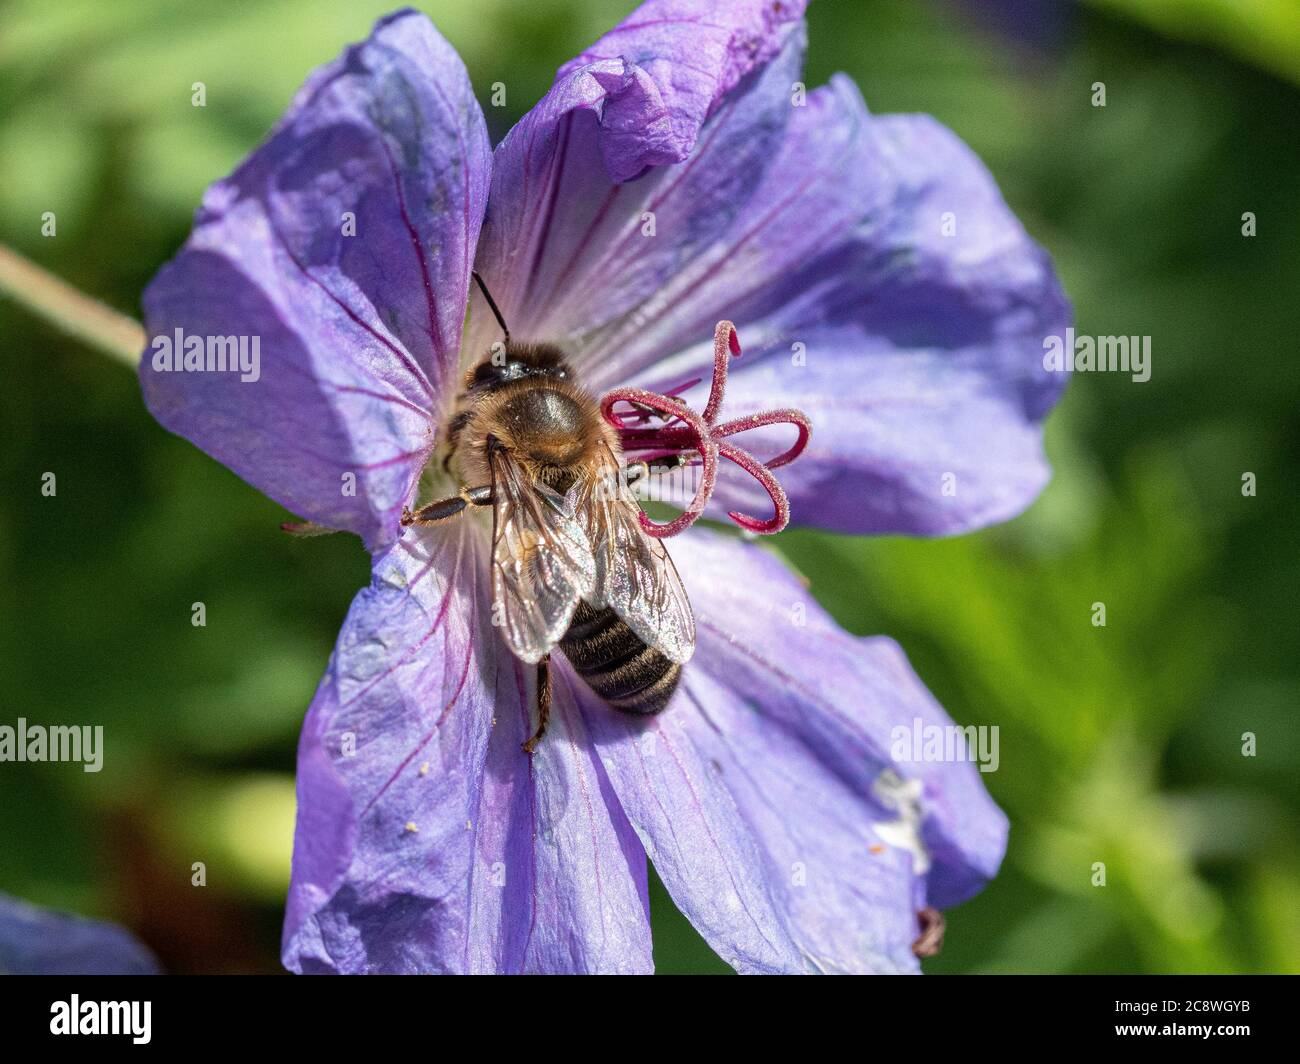 A close up of a honeybee feeding on the flower of Geranium Roxanne Stock Photo